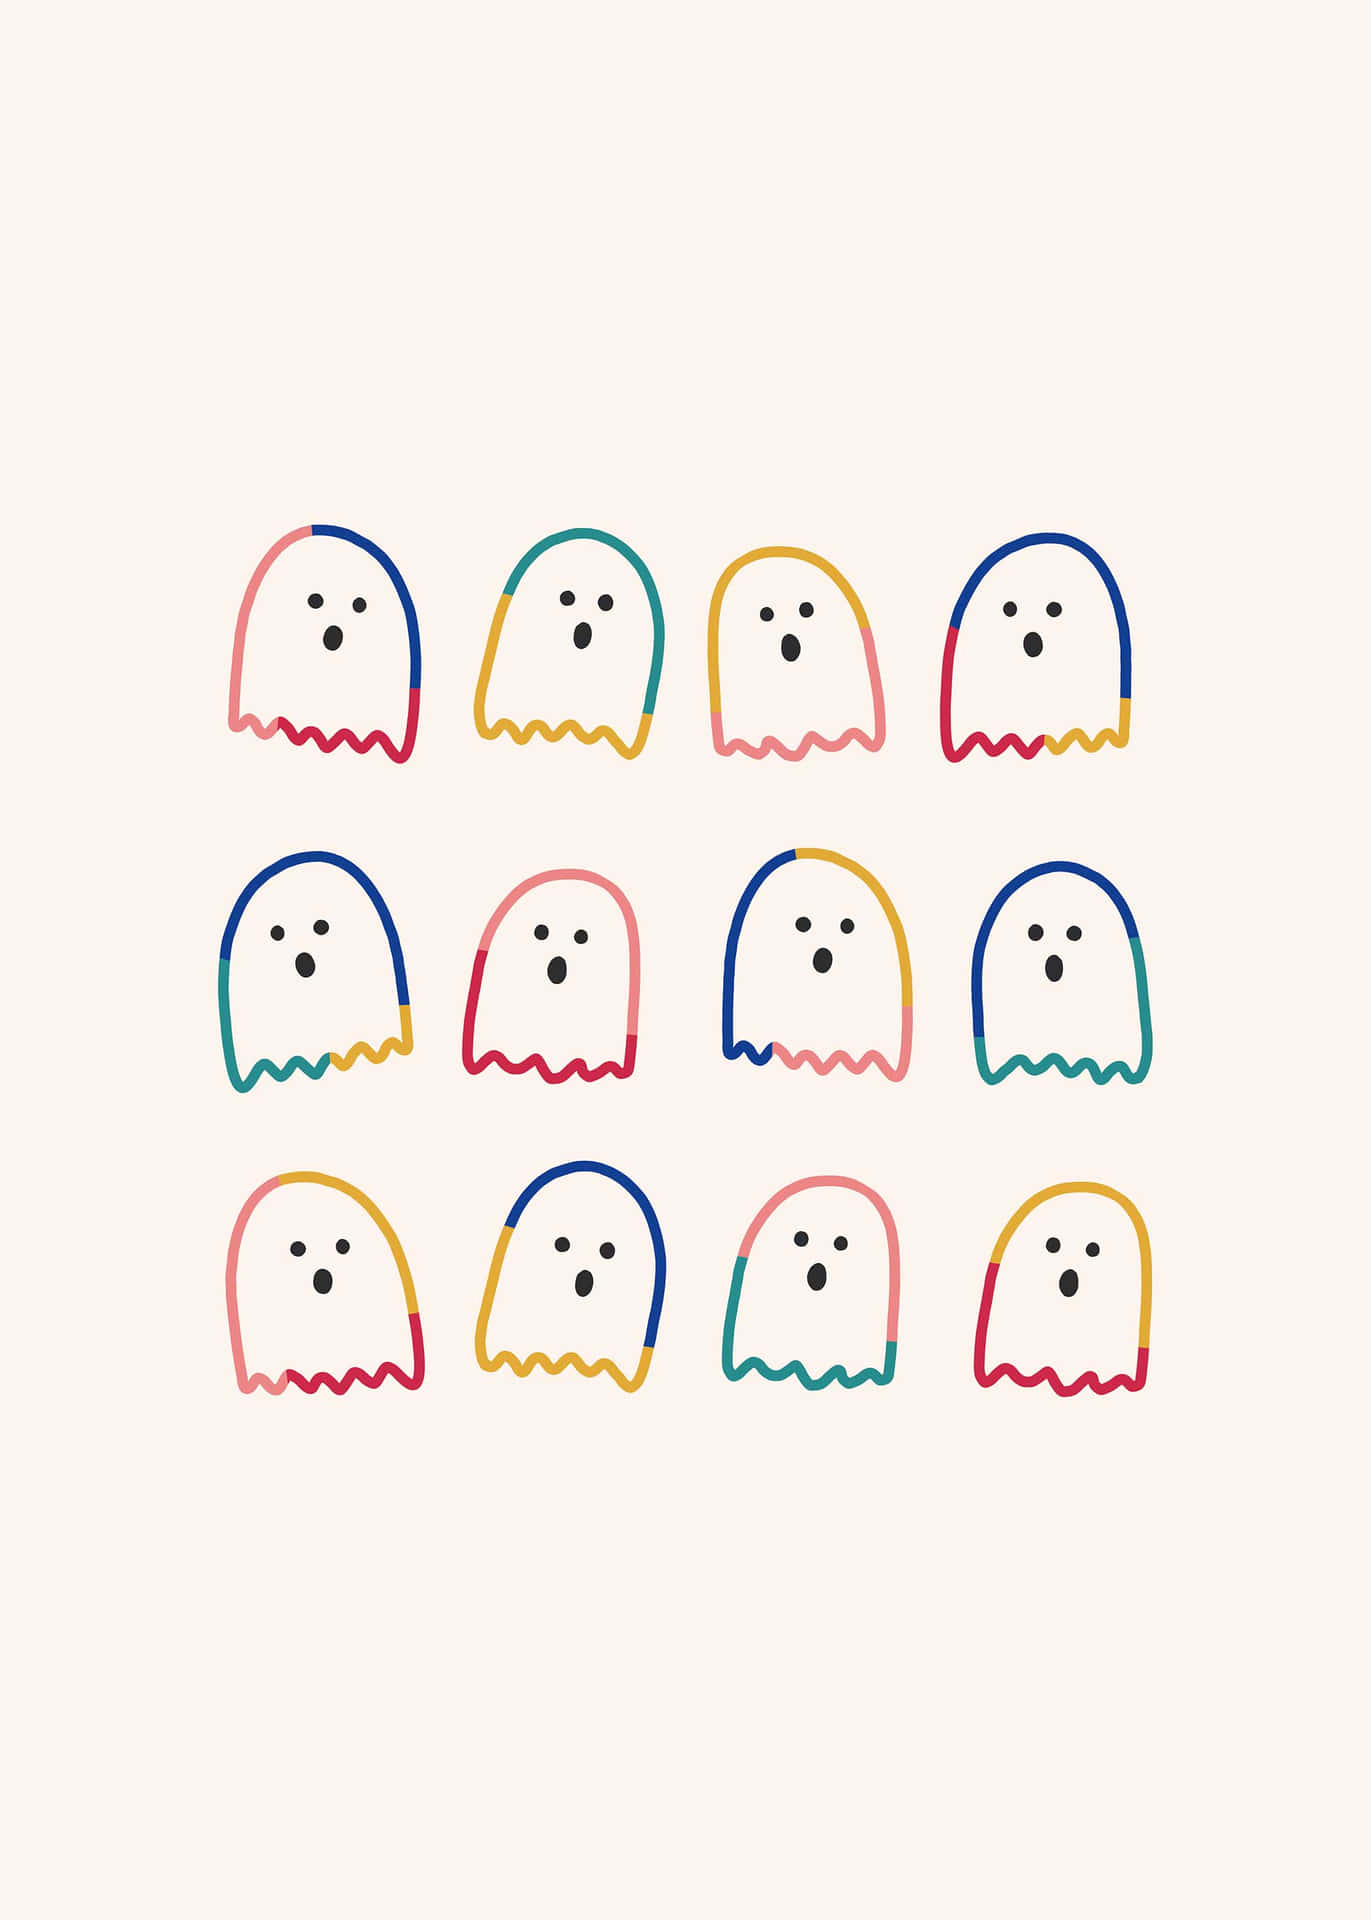 Download Cute Ghost Wallpaper 